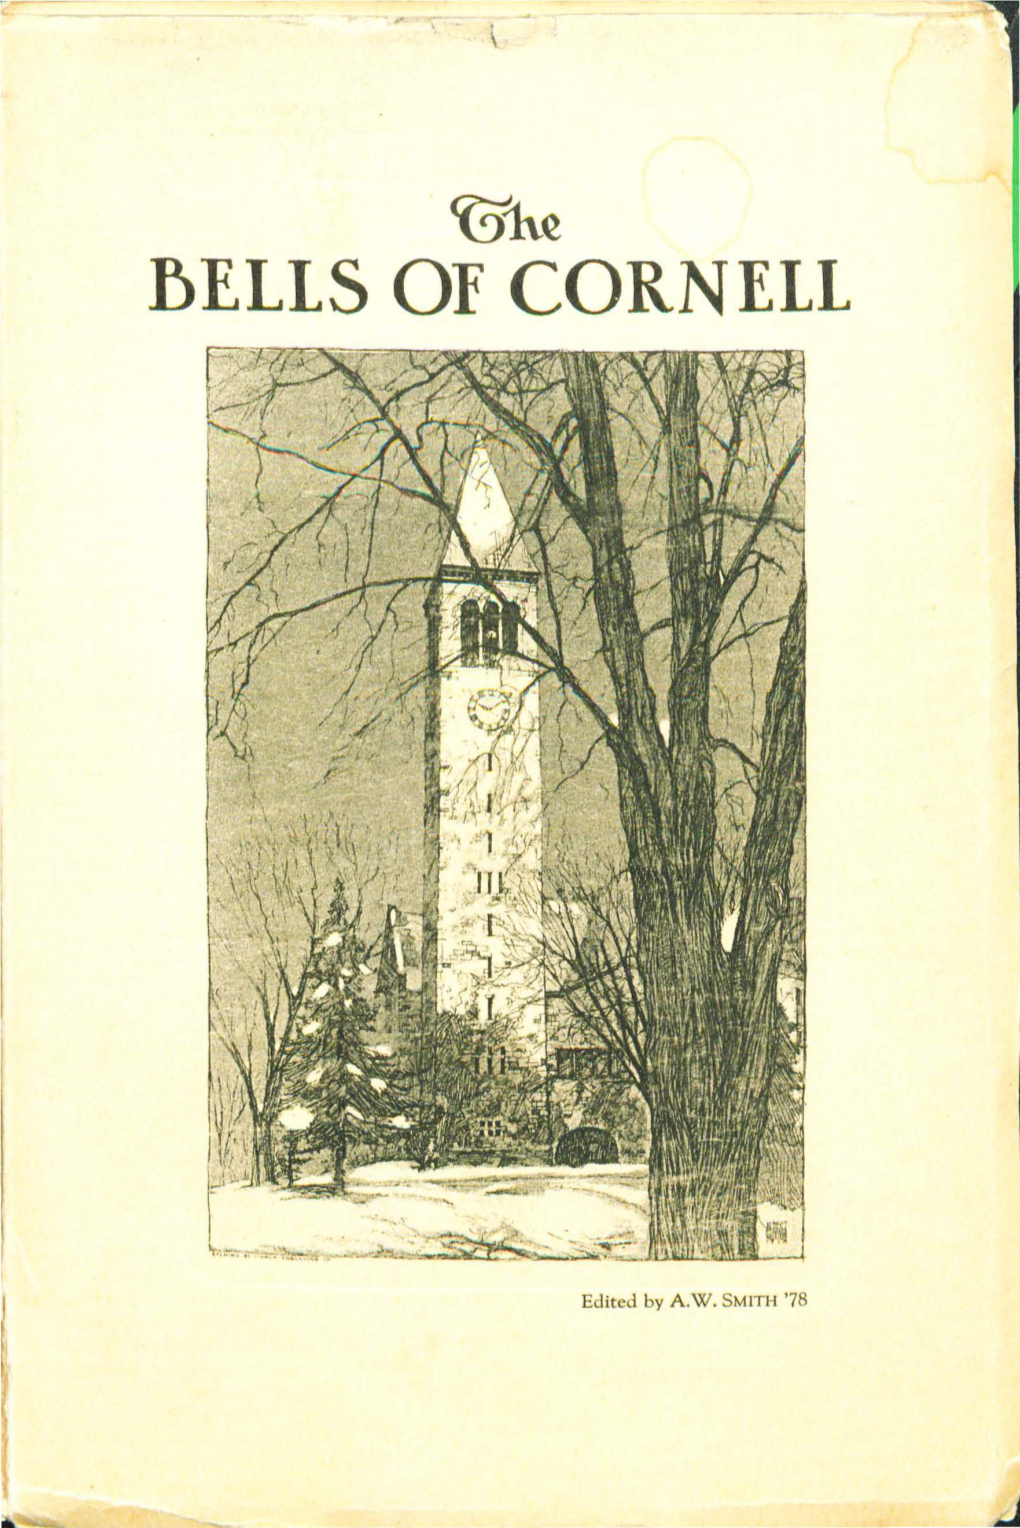 Bells of Cornell